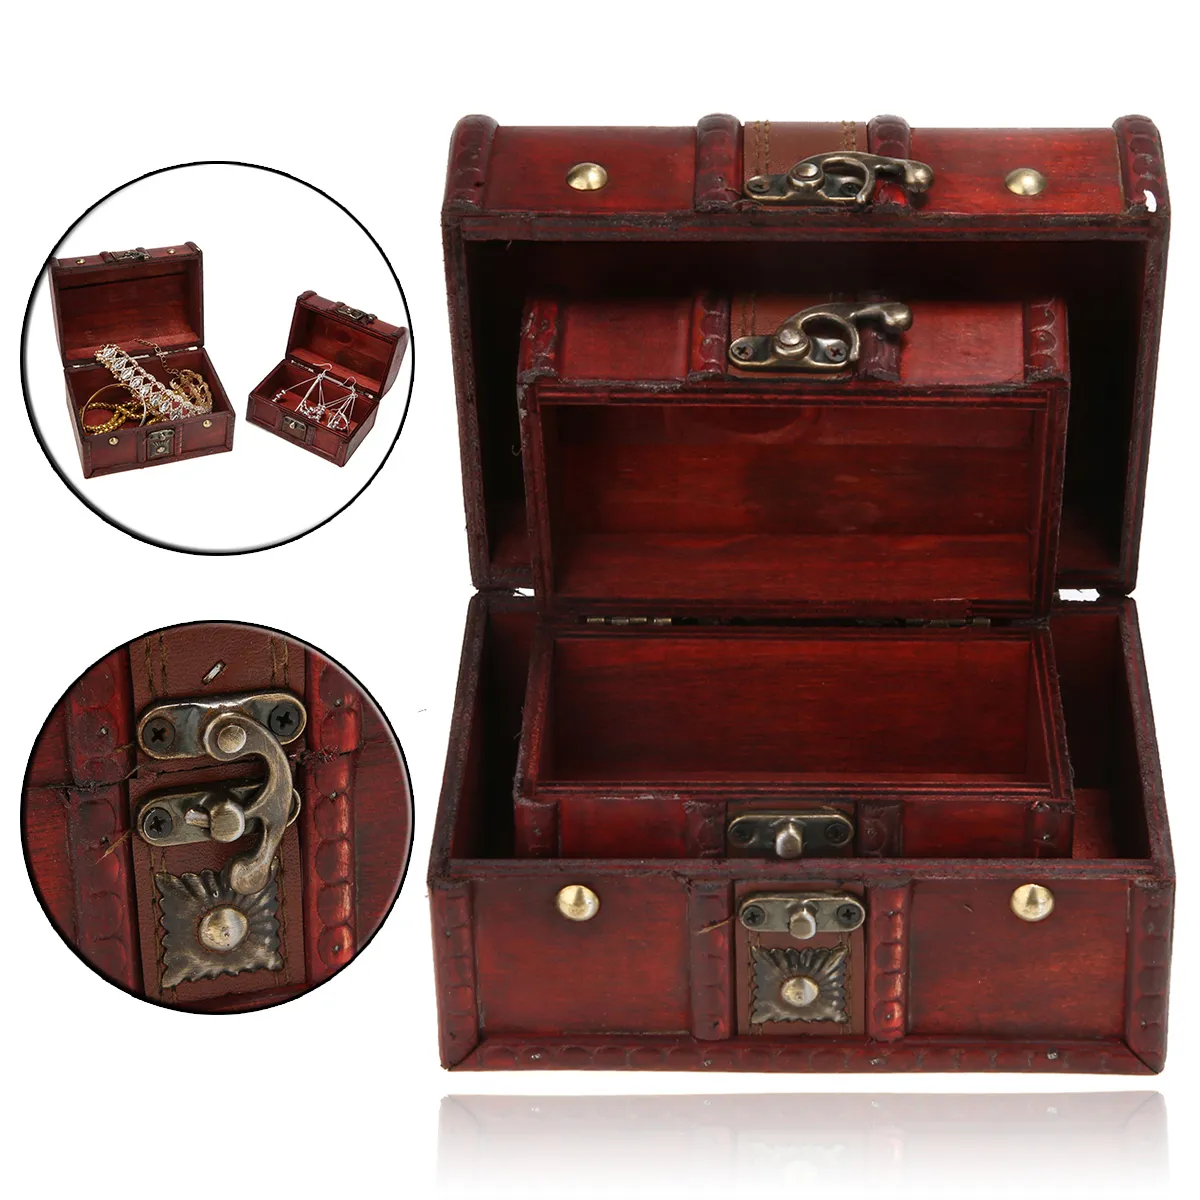 2st Vintage Wood Case Jewelry Storage Box Liten Treasure Chest Wood Crate Case Home Storage Boxes 2103158637955